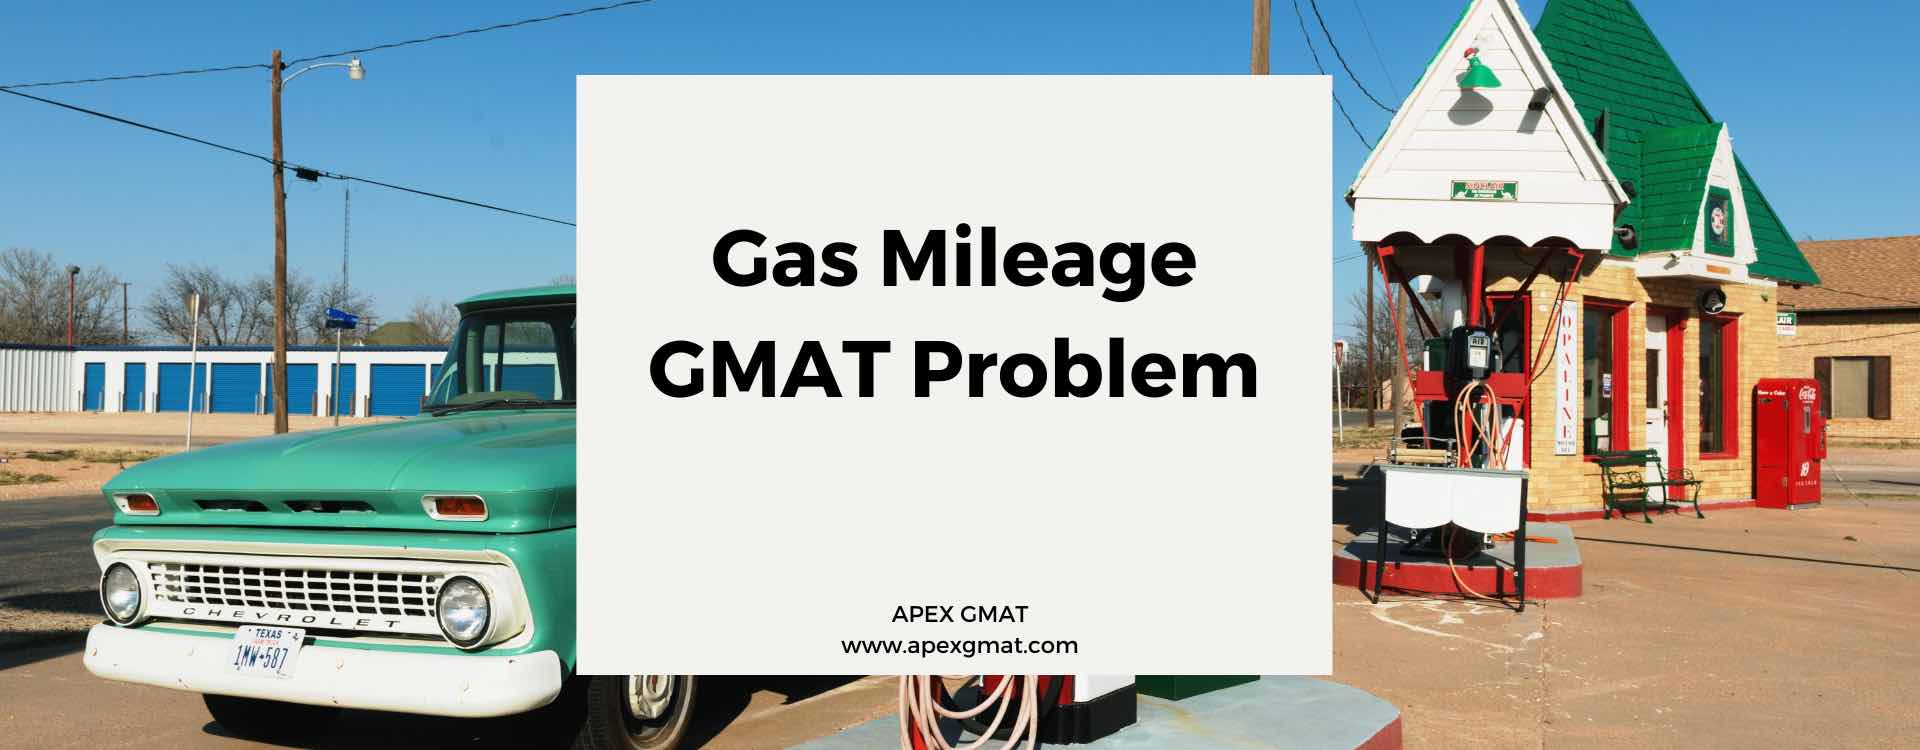 Gas Mileage GMAT Problem